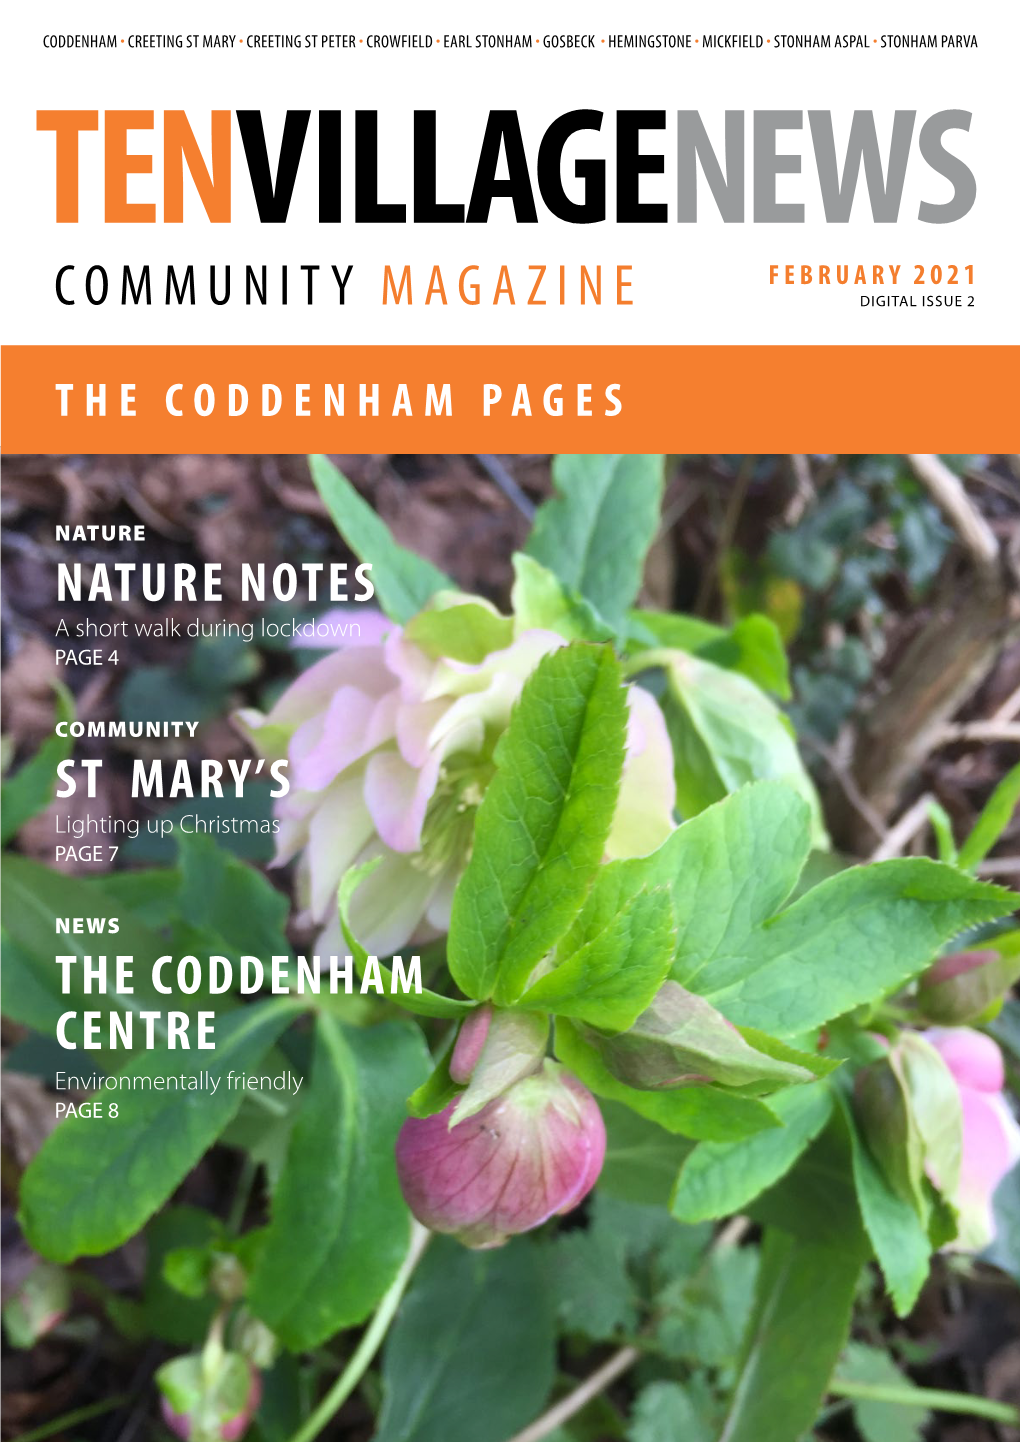 Community Magazine Digital Issue 2